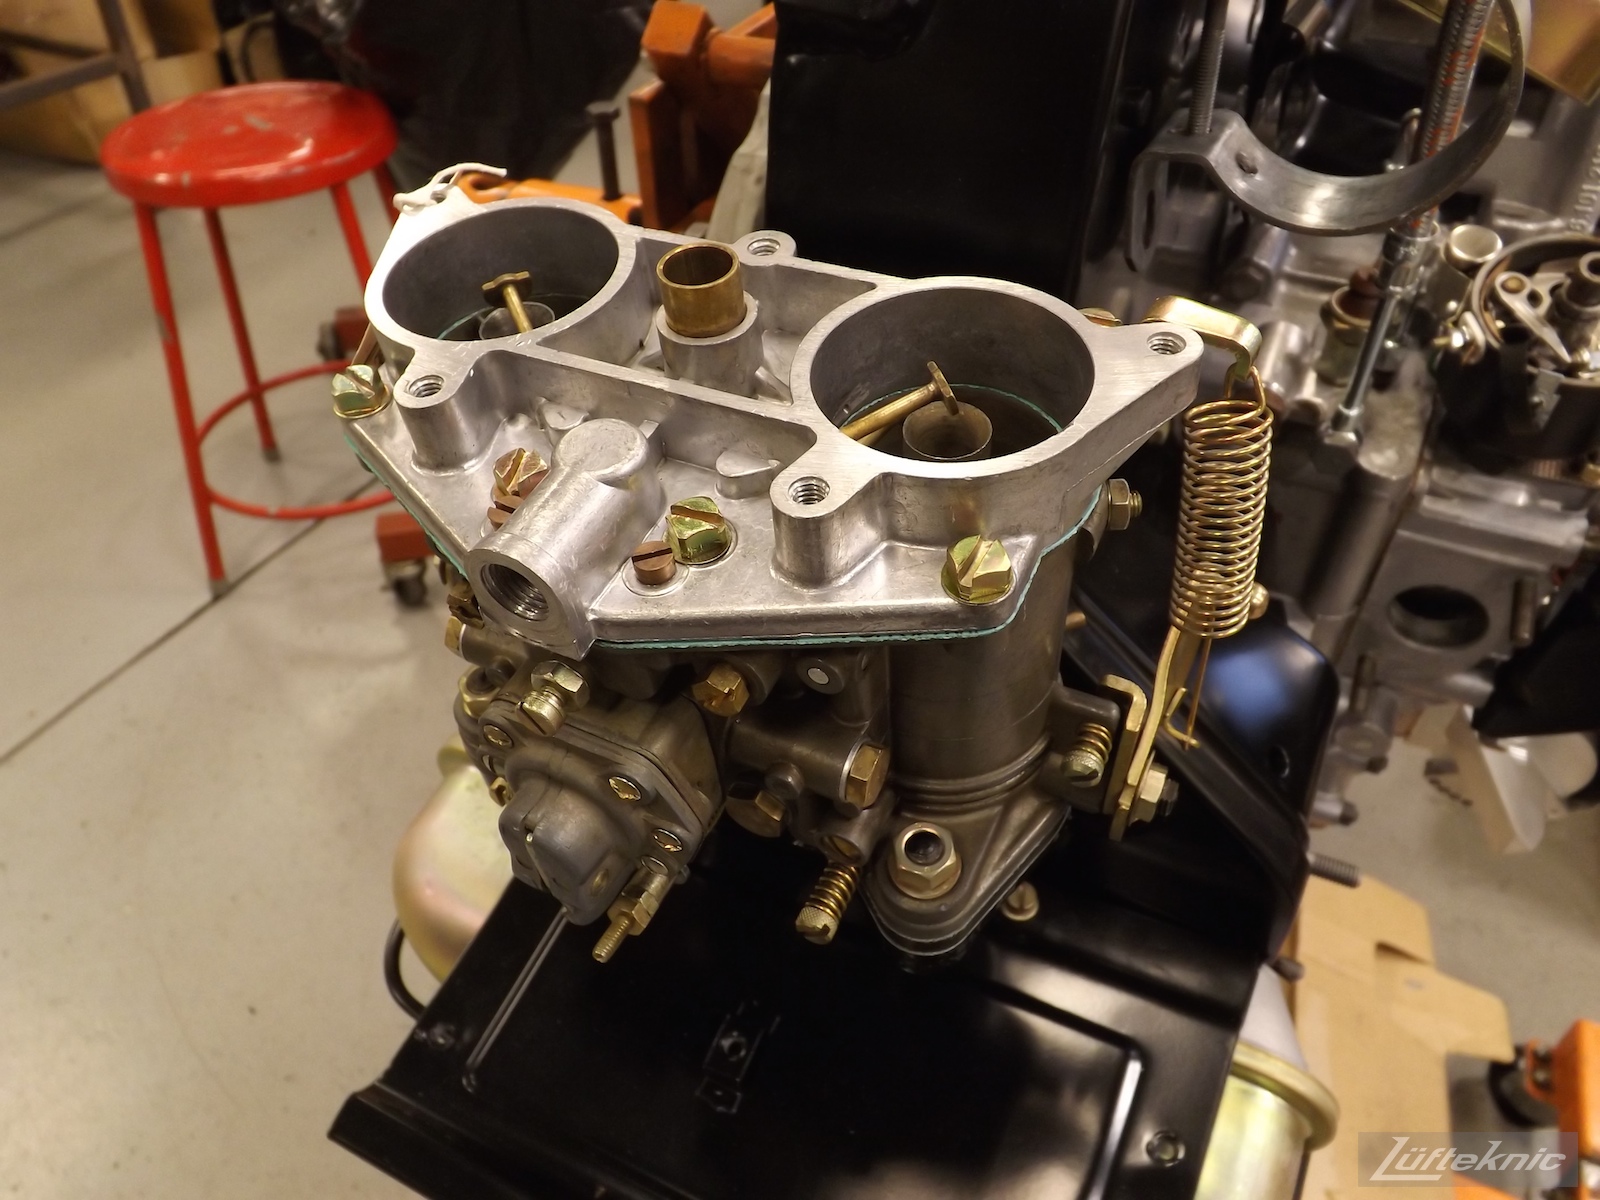 Rebuild carburetors for an Irish Green Porsche 912 undergoing restoration at Lufteknic.